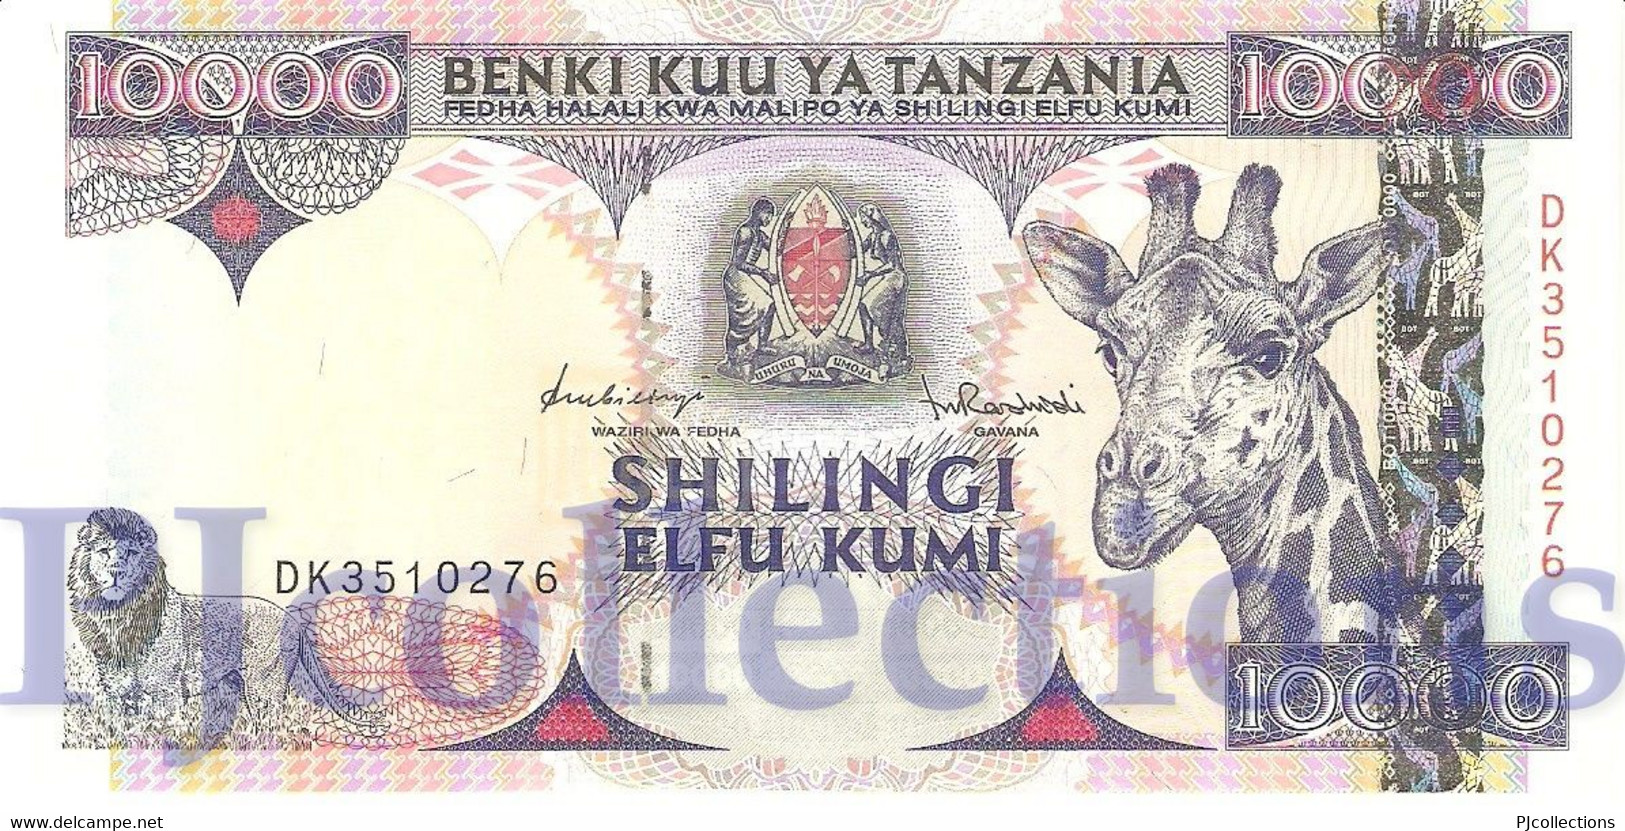 TANZANIA 10000 SHILINGI 1997 PICK 33 UNC - Tansania